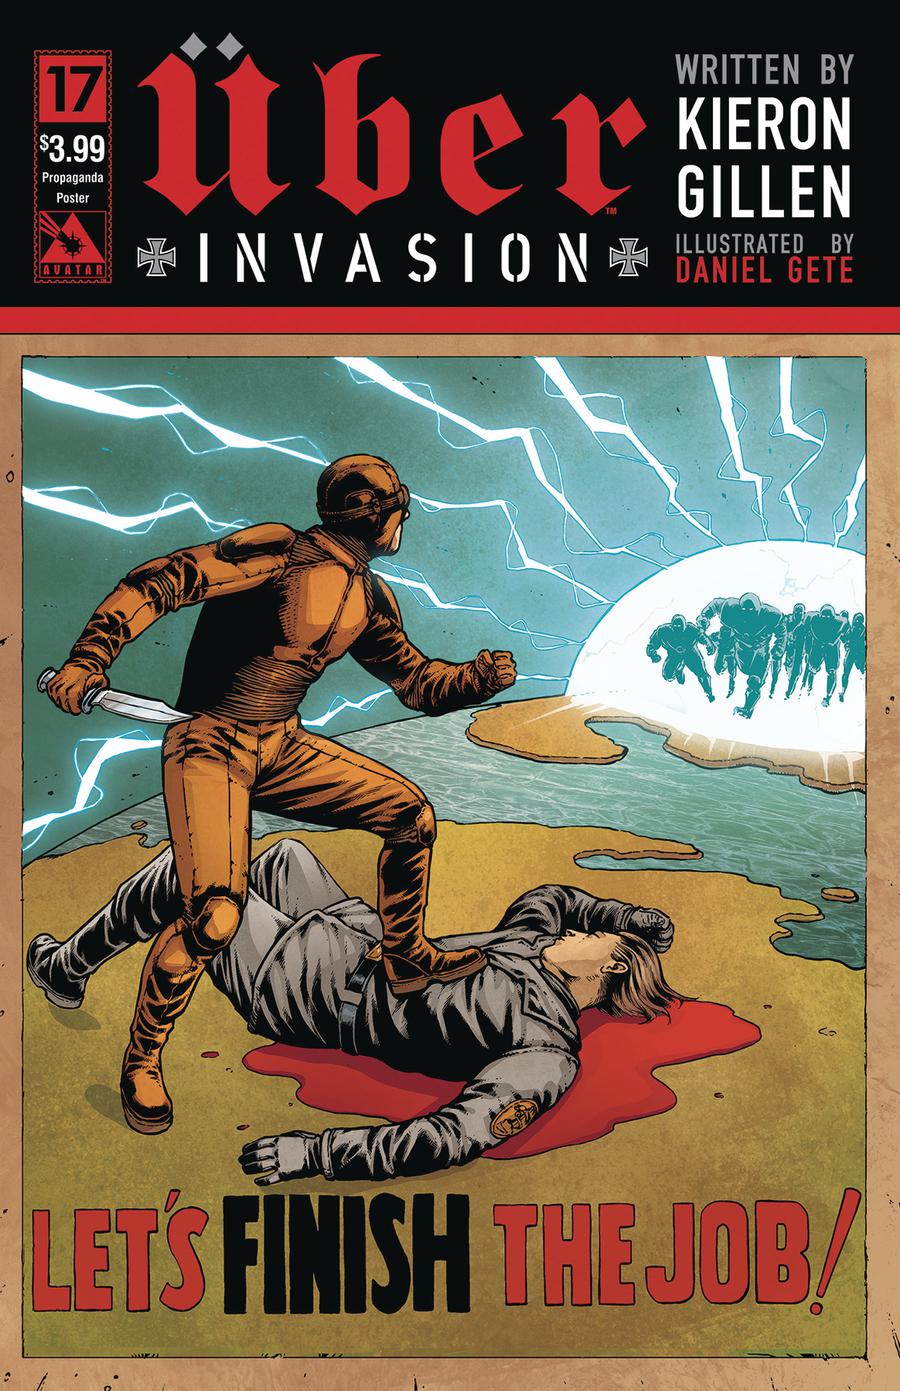 Uber Invasion #17 Cover D Propaganda Poster Cover